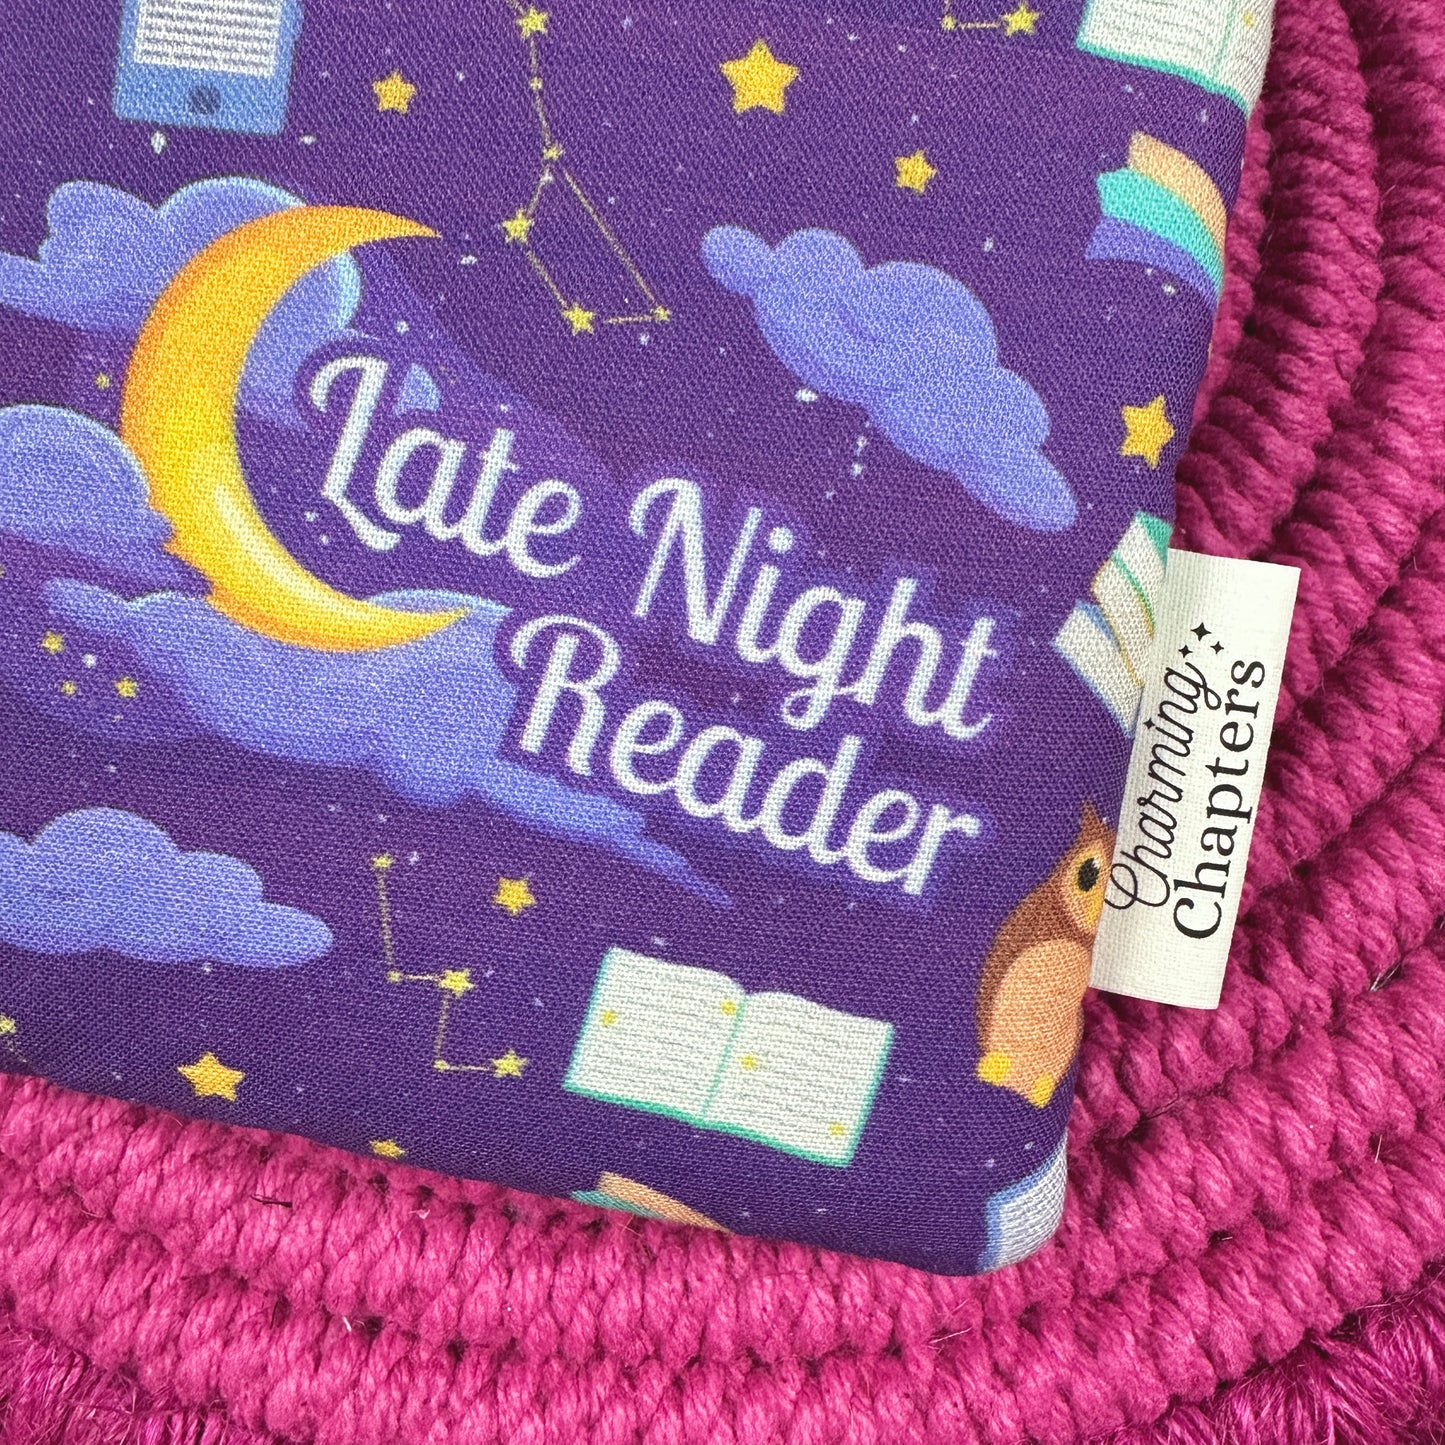 Late Night Reader Book Sleeve